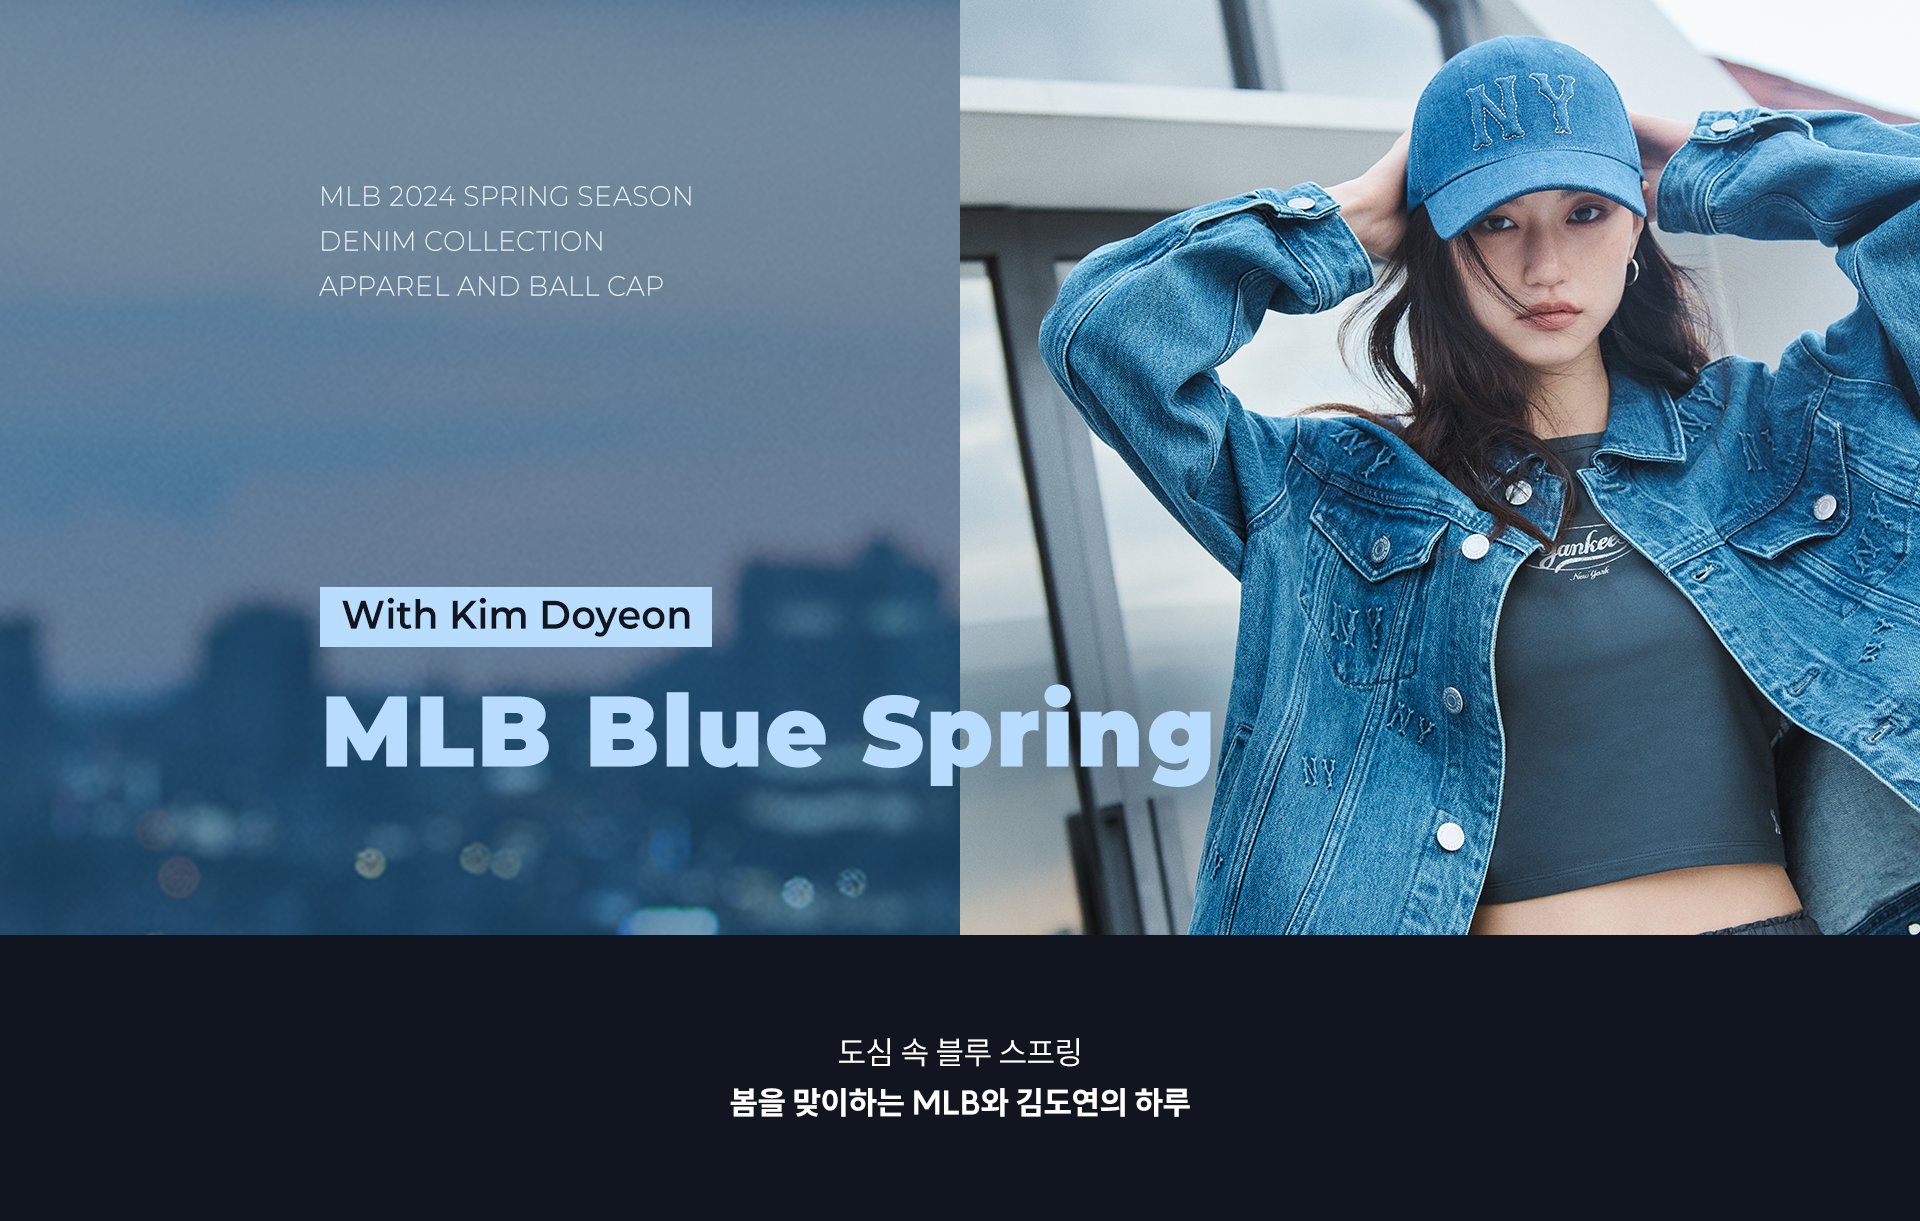 MLB Blue Spring With Kim Doyeon 도심 속 블루 스프링 봄을 맞이하는 MLB와 김도연의 하루